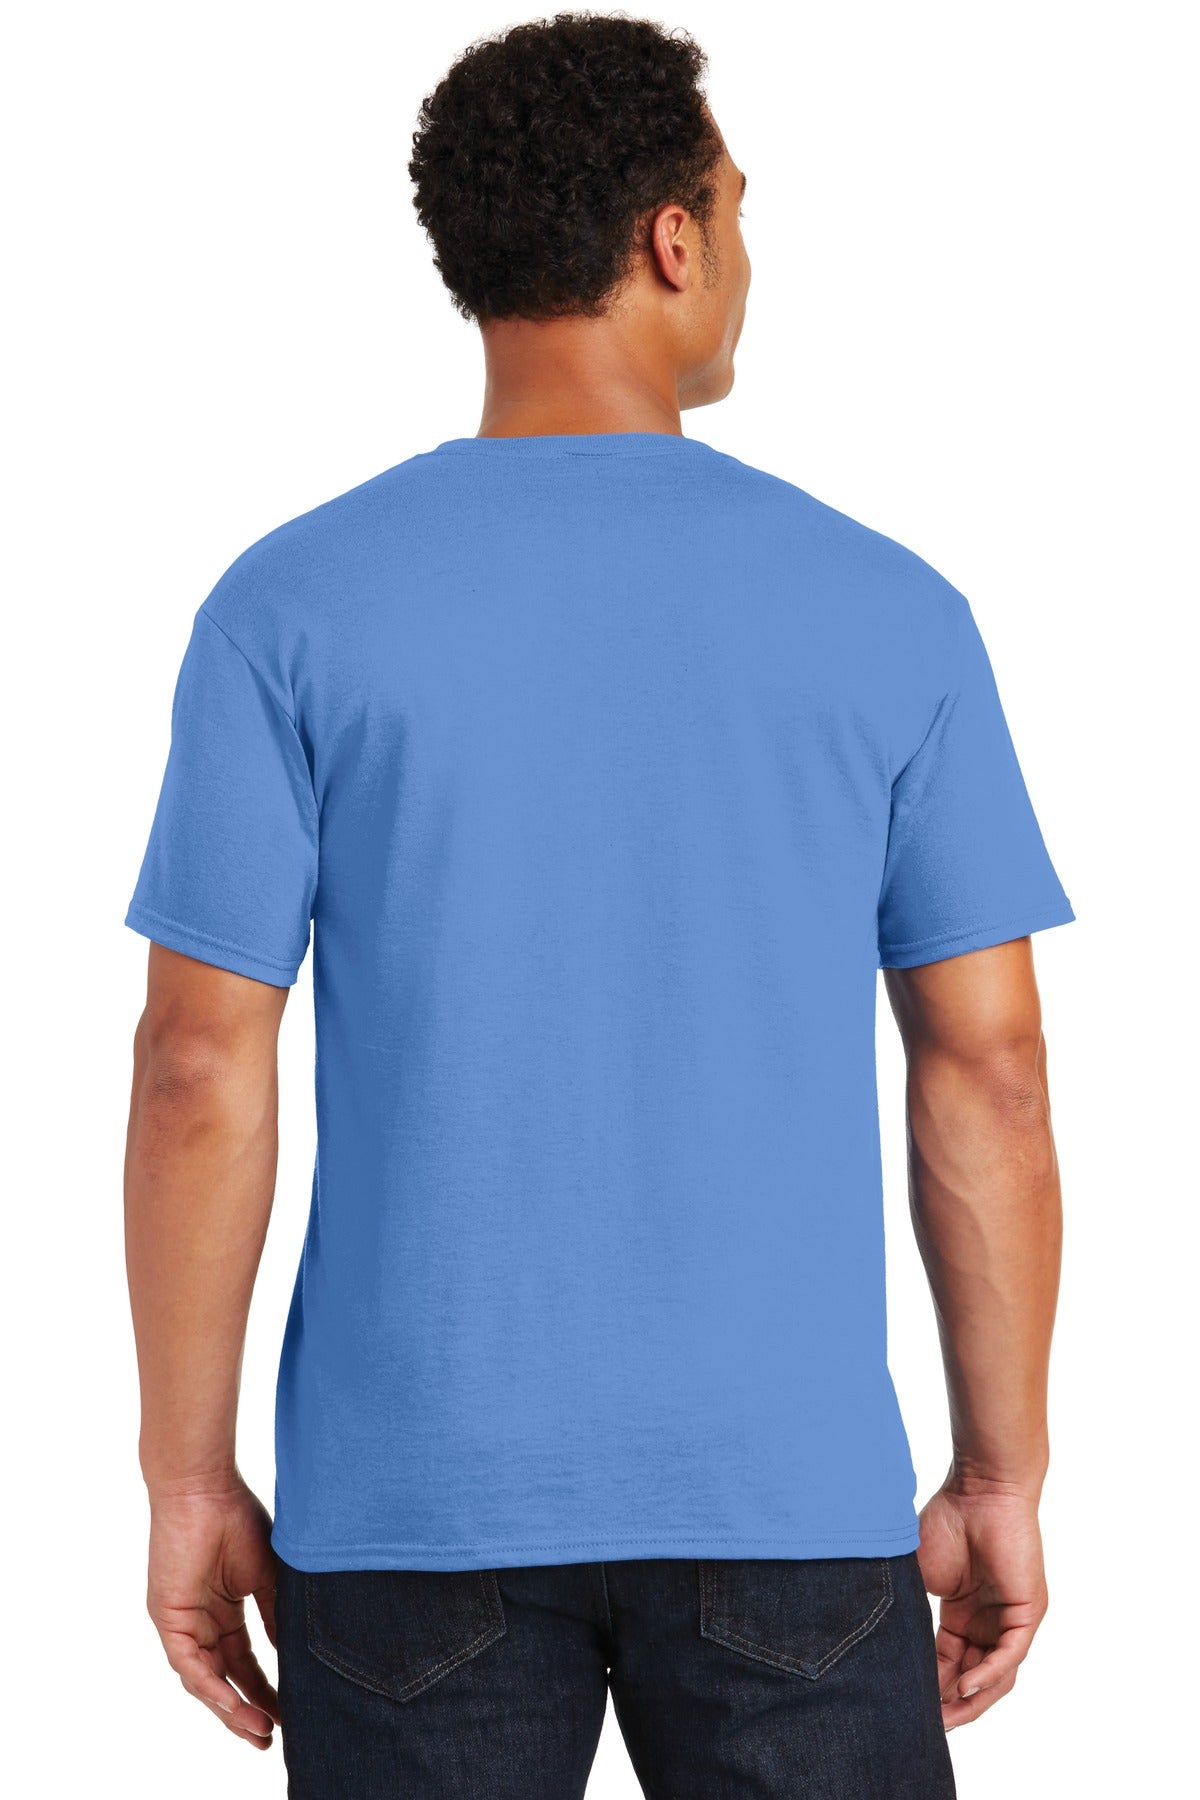 JERZEES® - Dri-Power® 50/50 Cotton/Poly T-Shirt. 29M [Columbia Blue] - DFW Impression